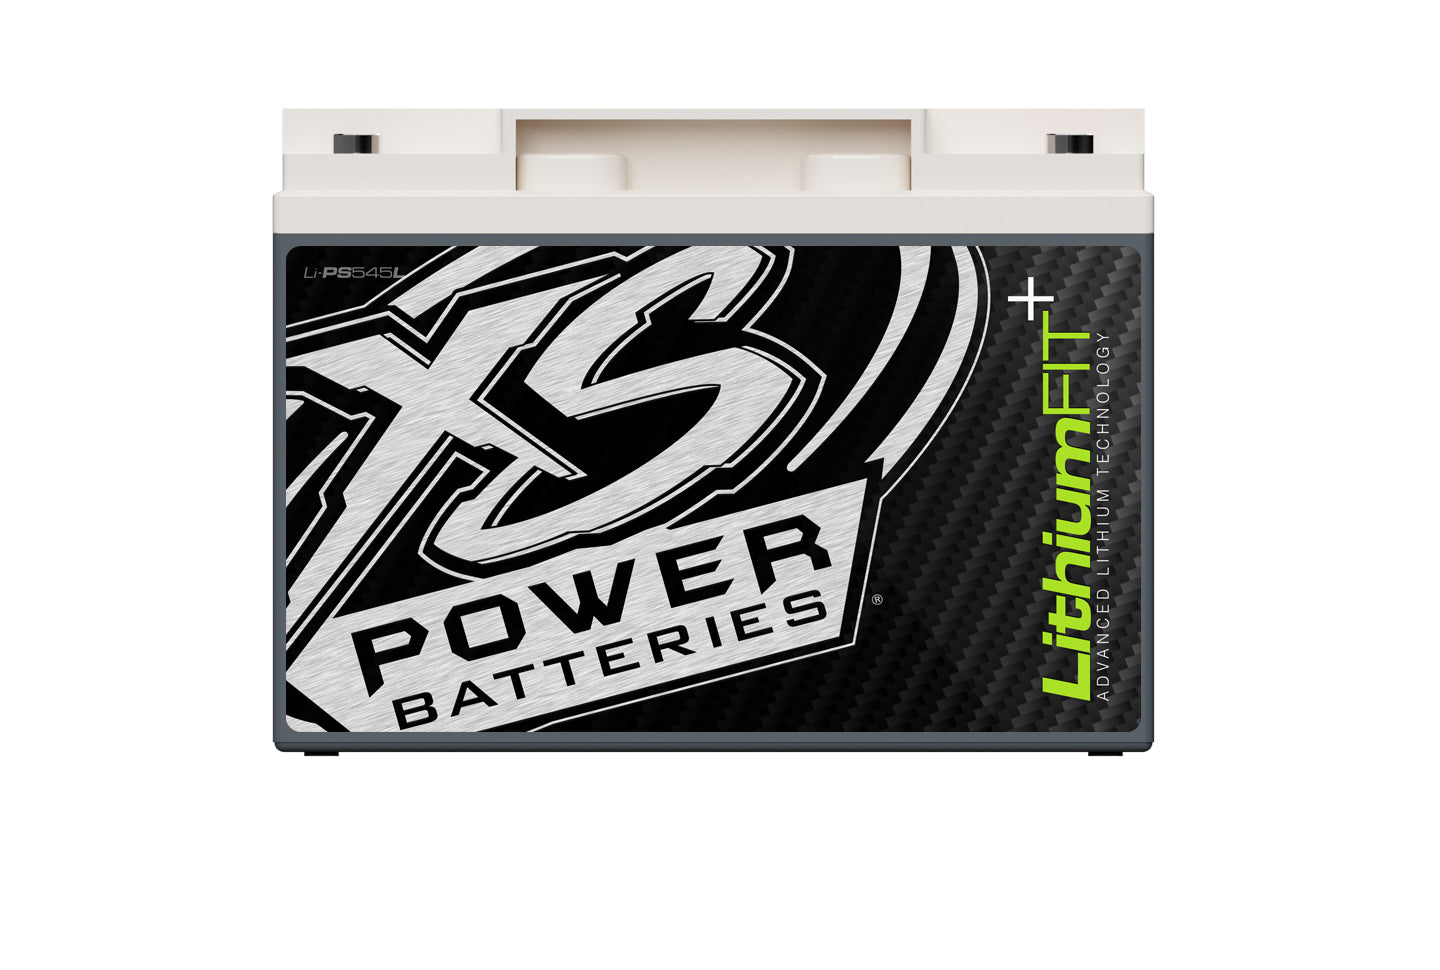 Li-PS545L XS Power 12VDC Lithium Powersports Battery 240A 13.2AhAh